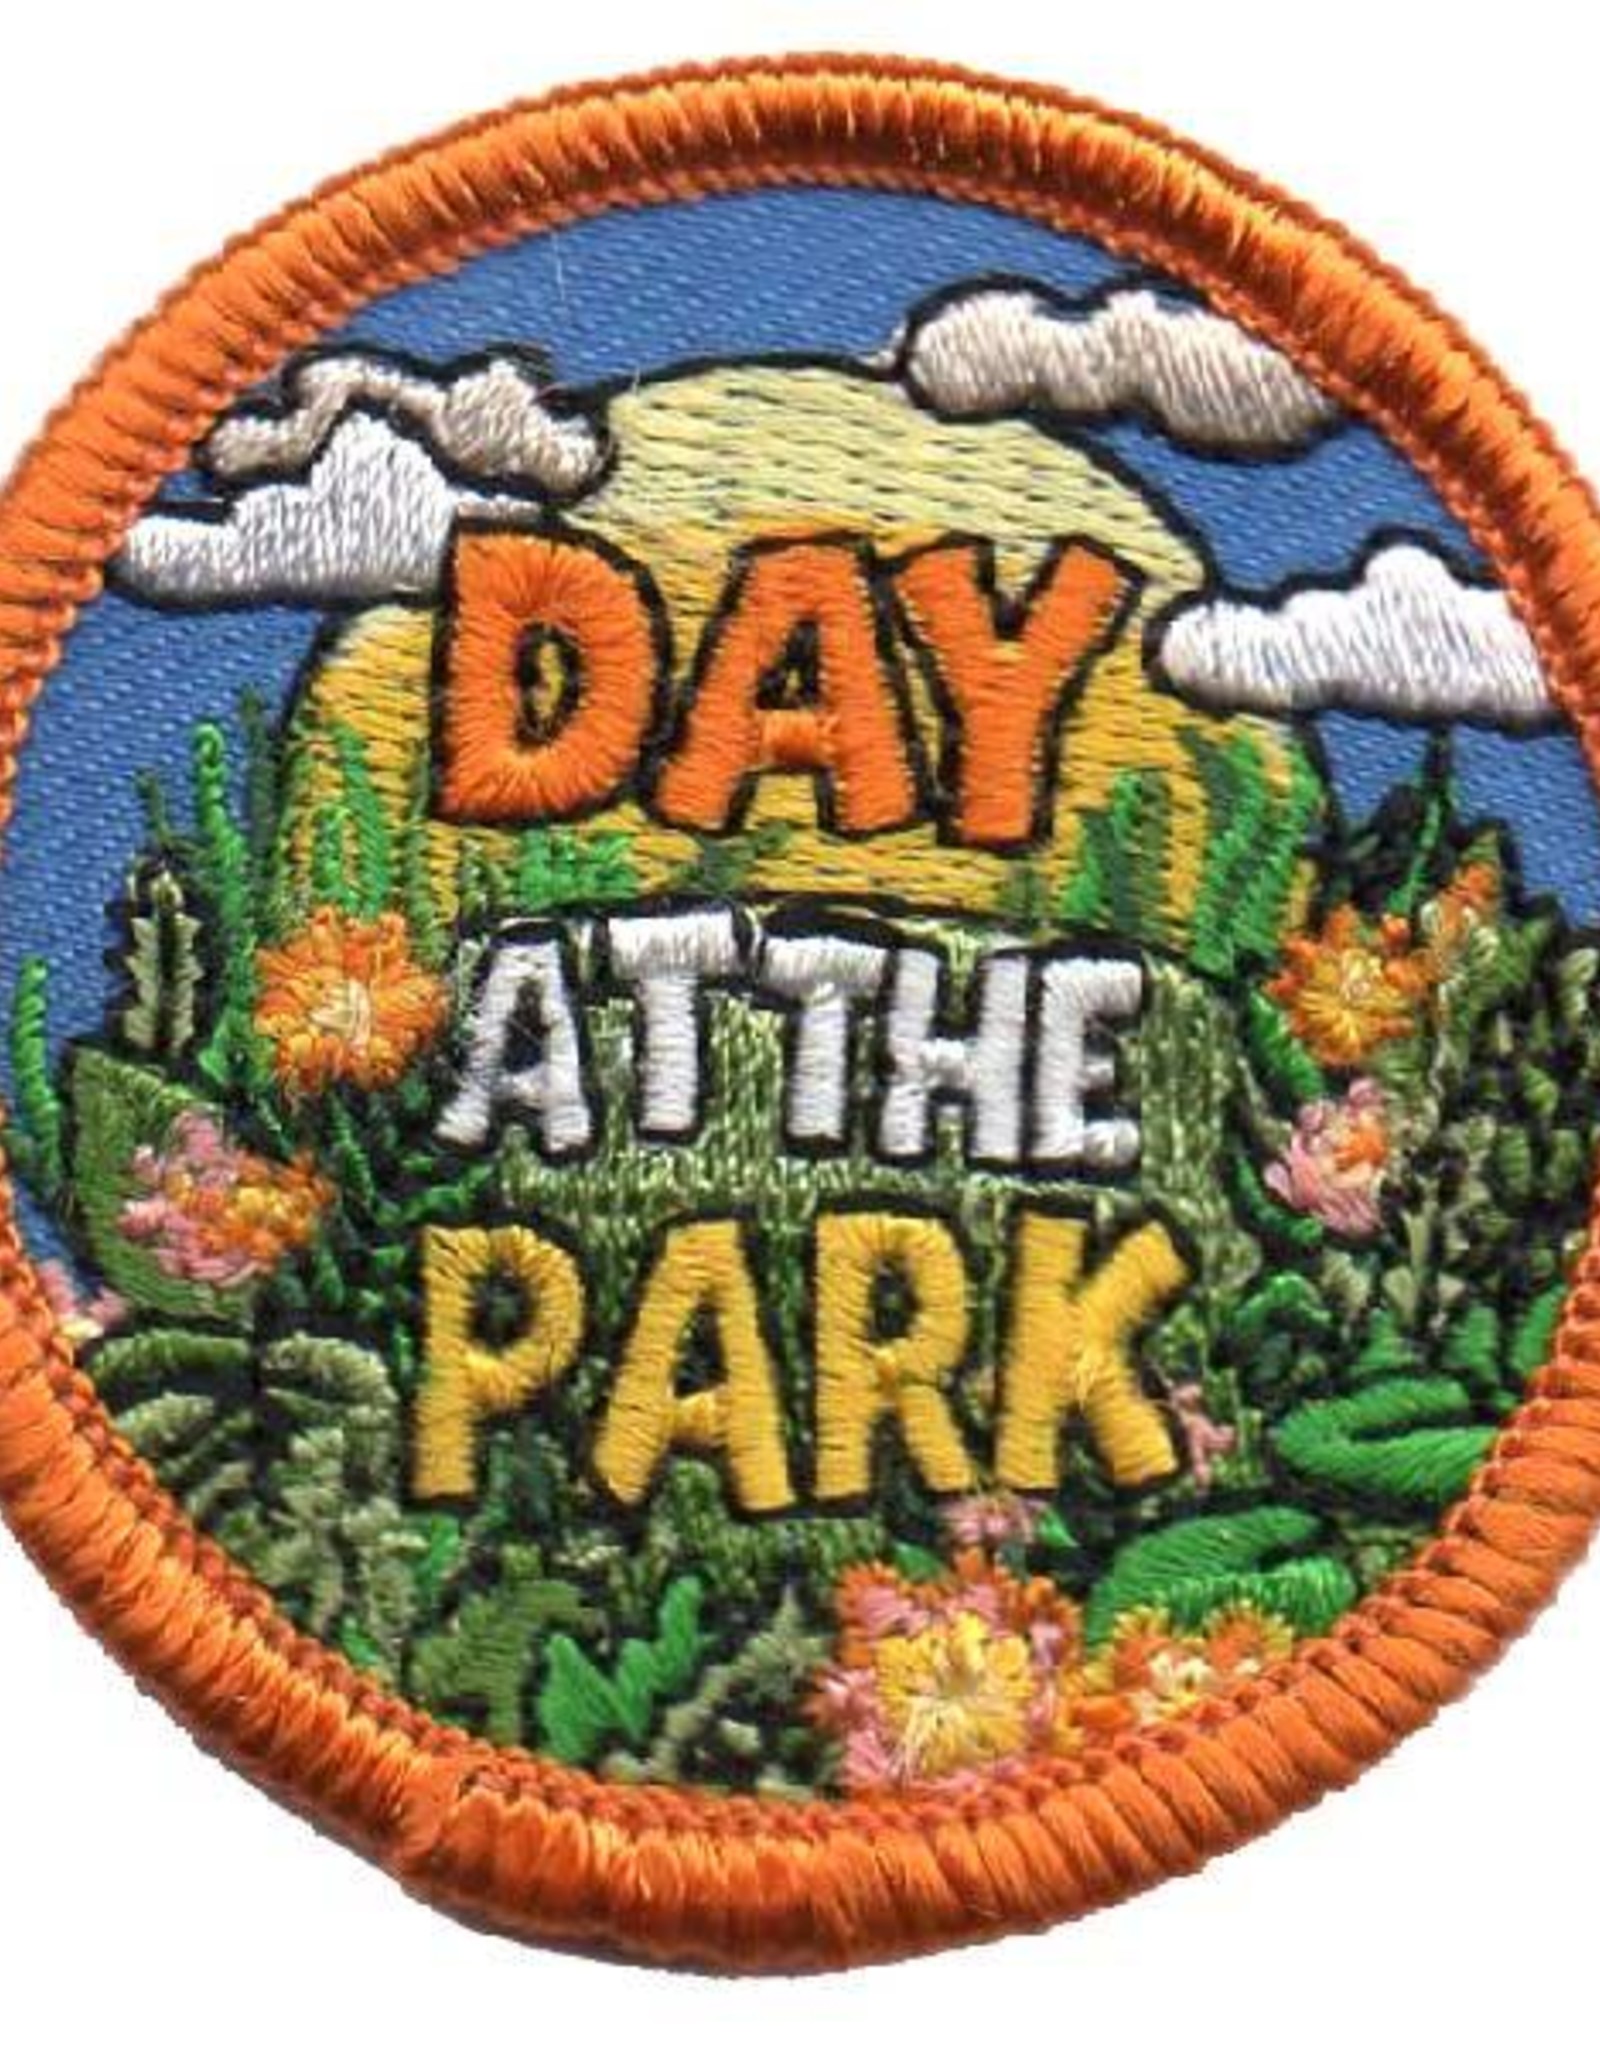 Advantage Emblem & Screen Prnt *Day at the Park Fun Patch